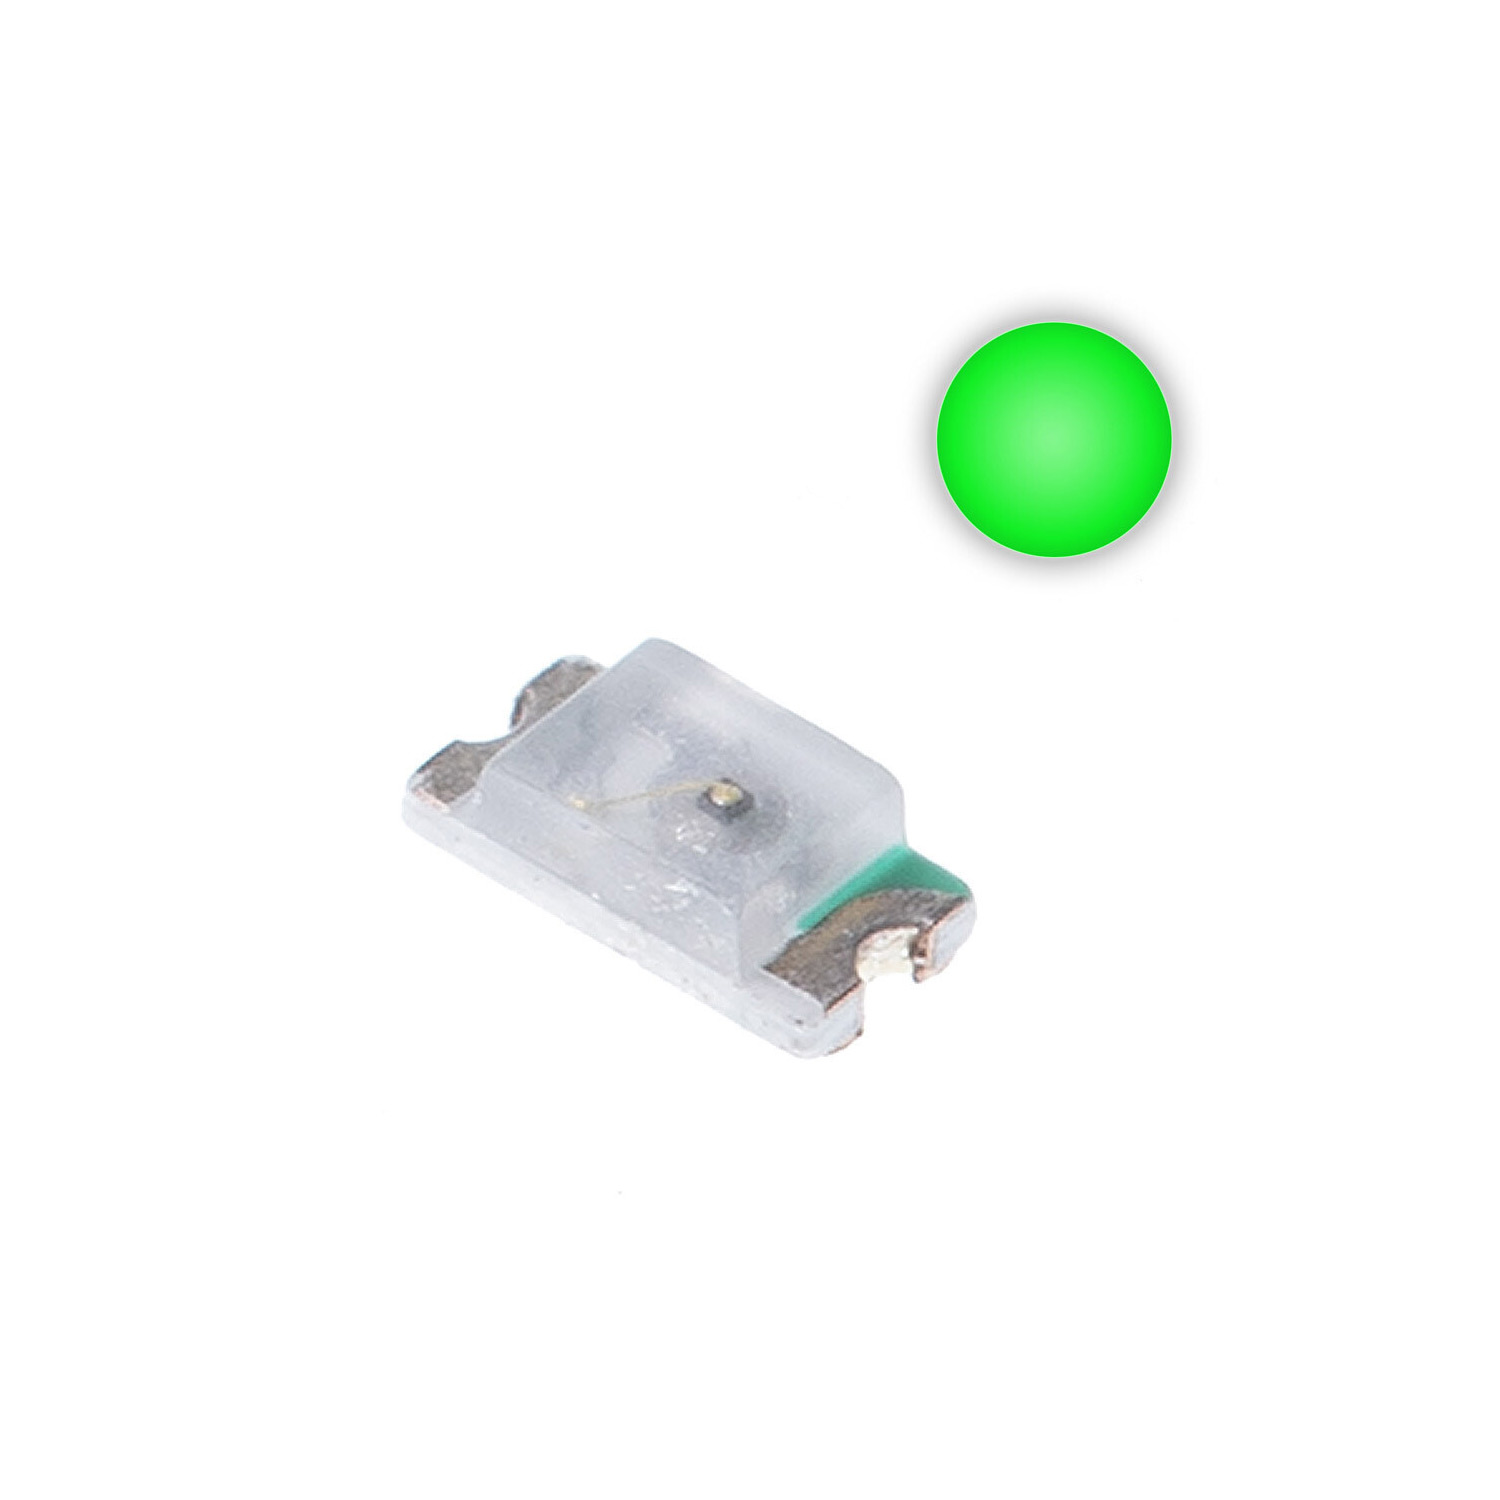 2 x SMD LED (groen)